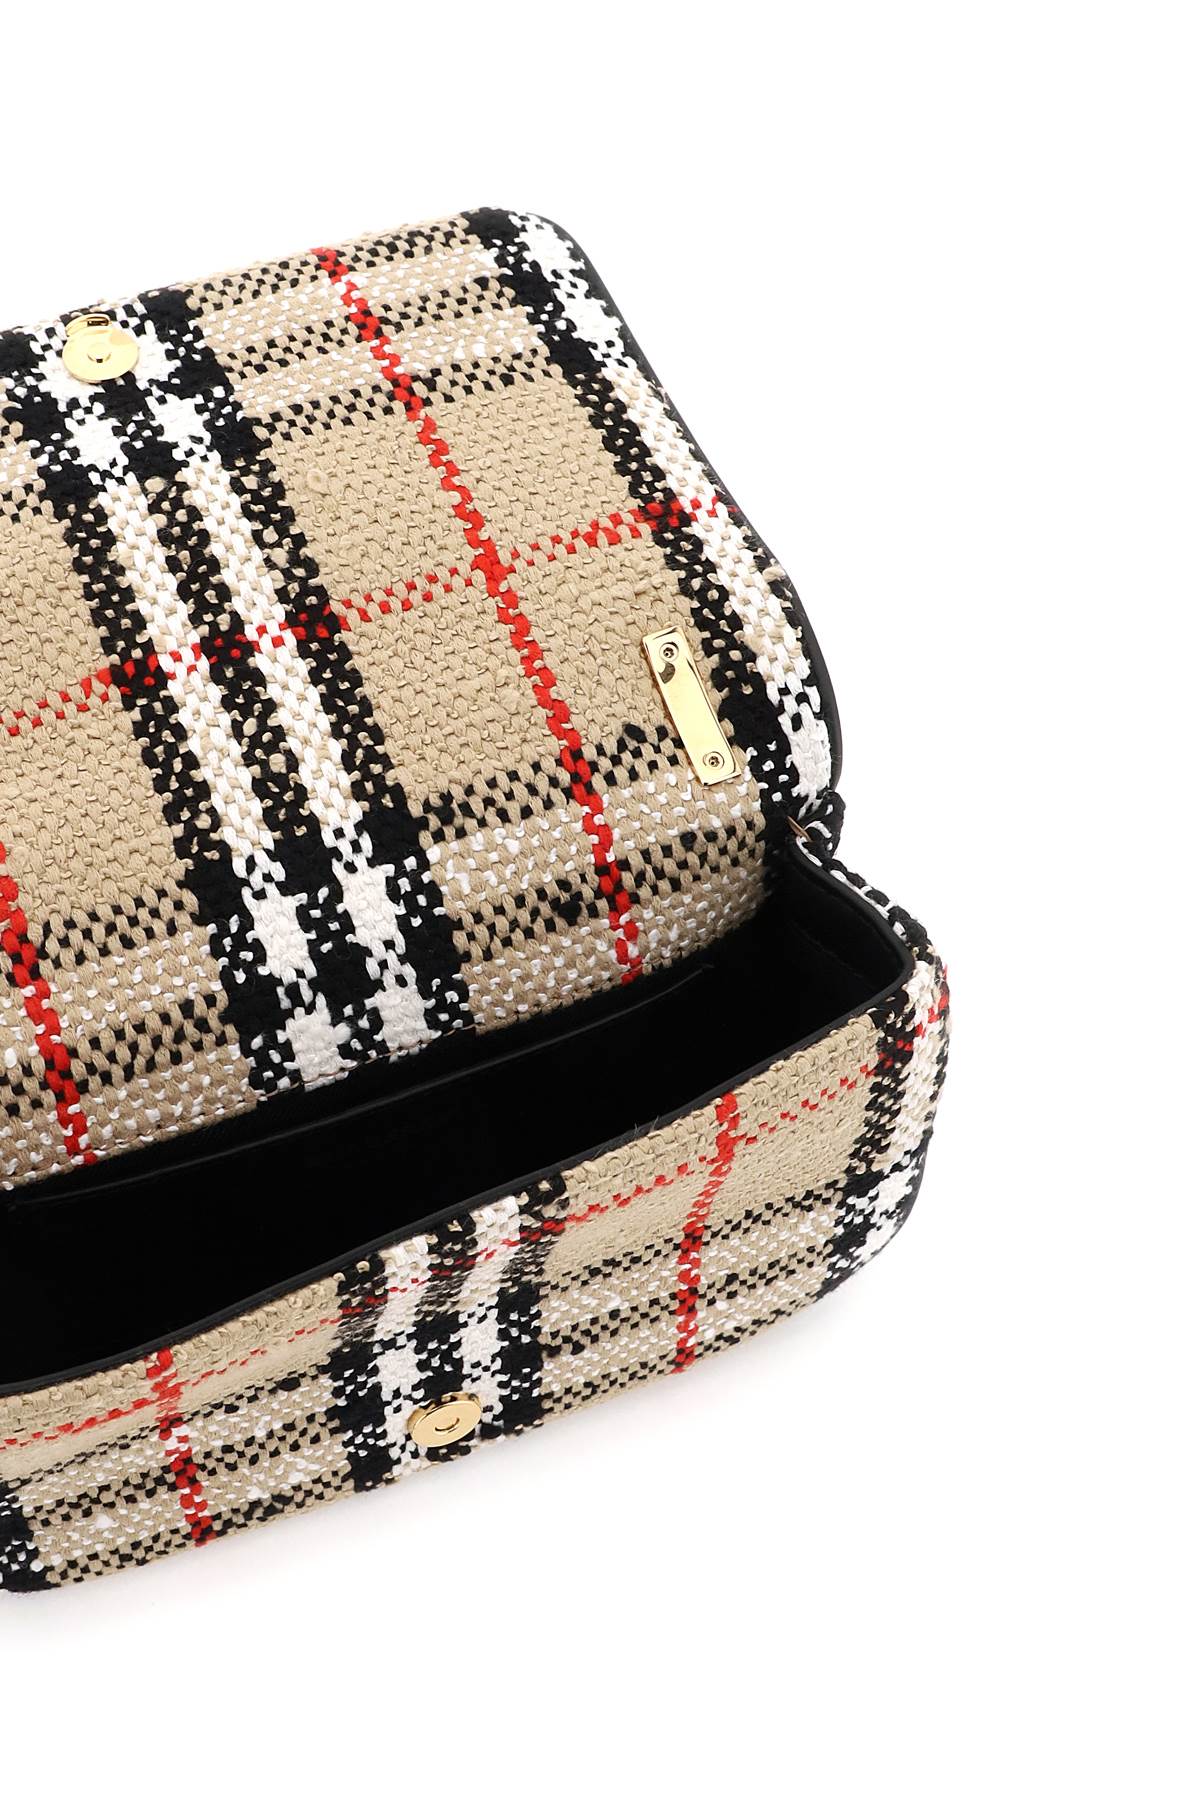 BURBERRY Elegant Boucle Crossbody Handbag for Women - Limited Edition